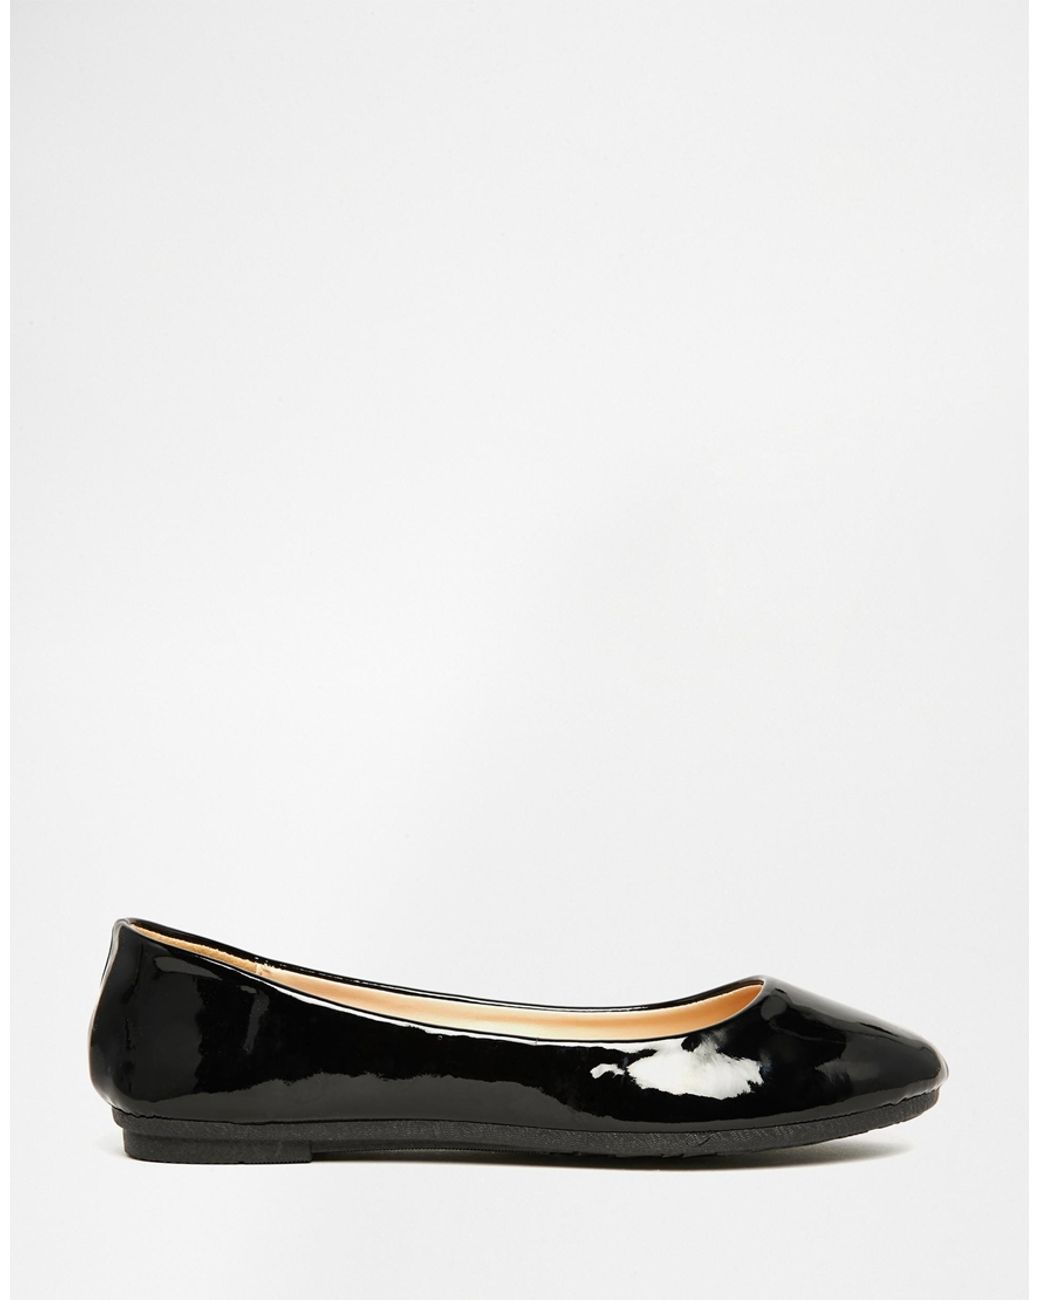 Daisy Street Black Patent Ballet Flat Shoes | Lyst